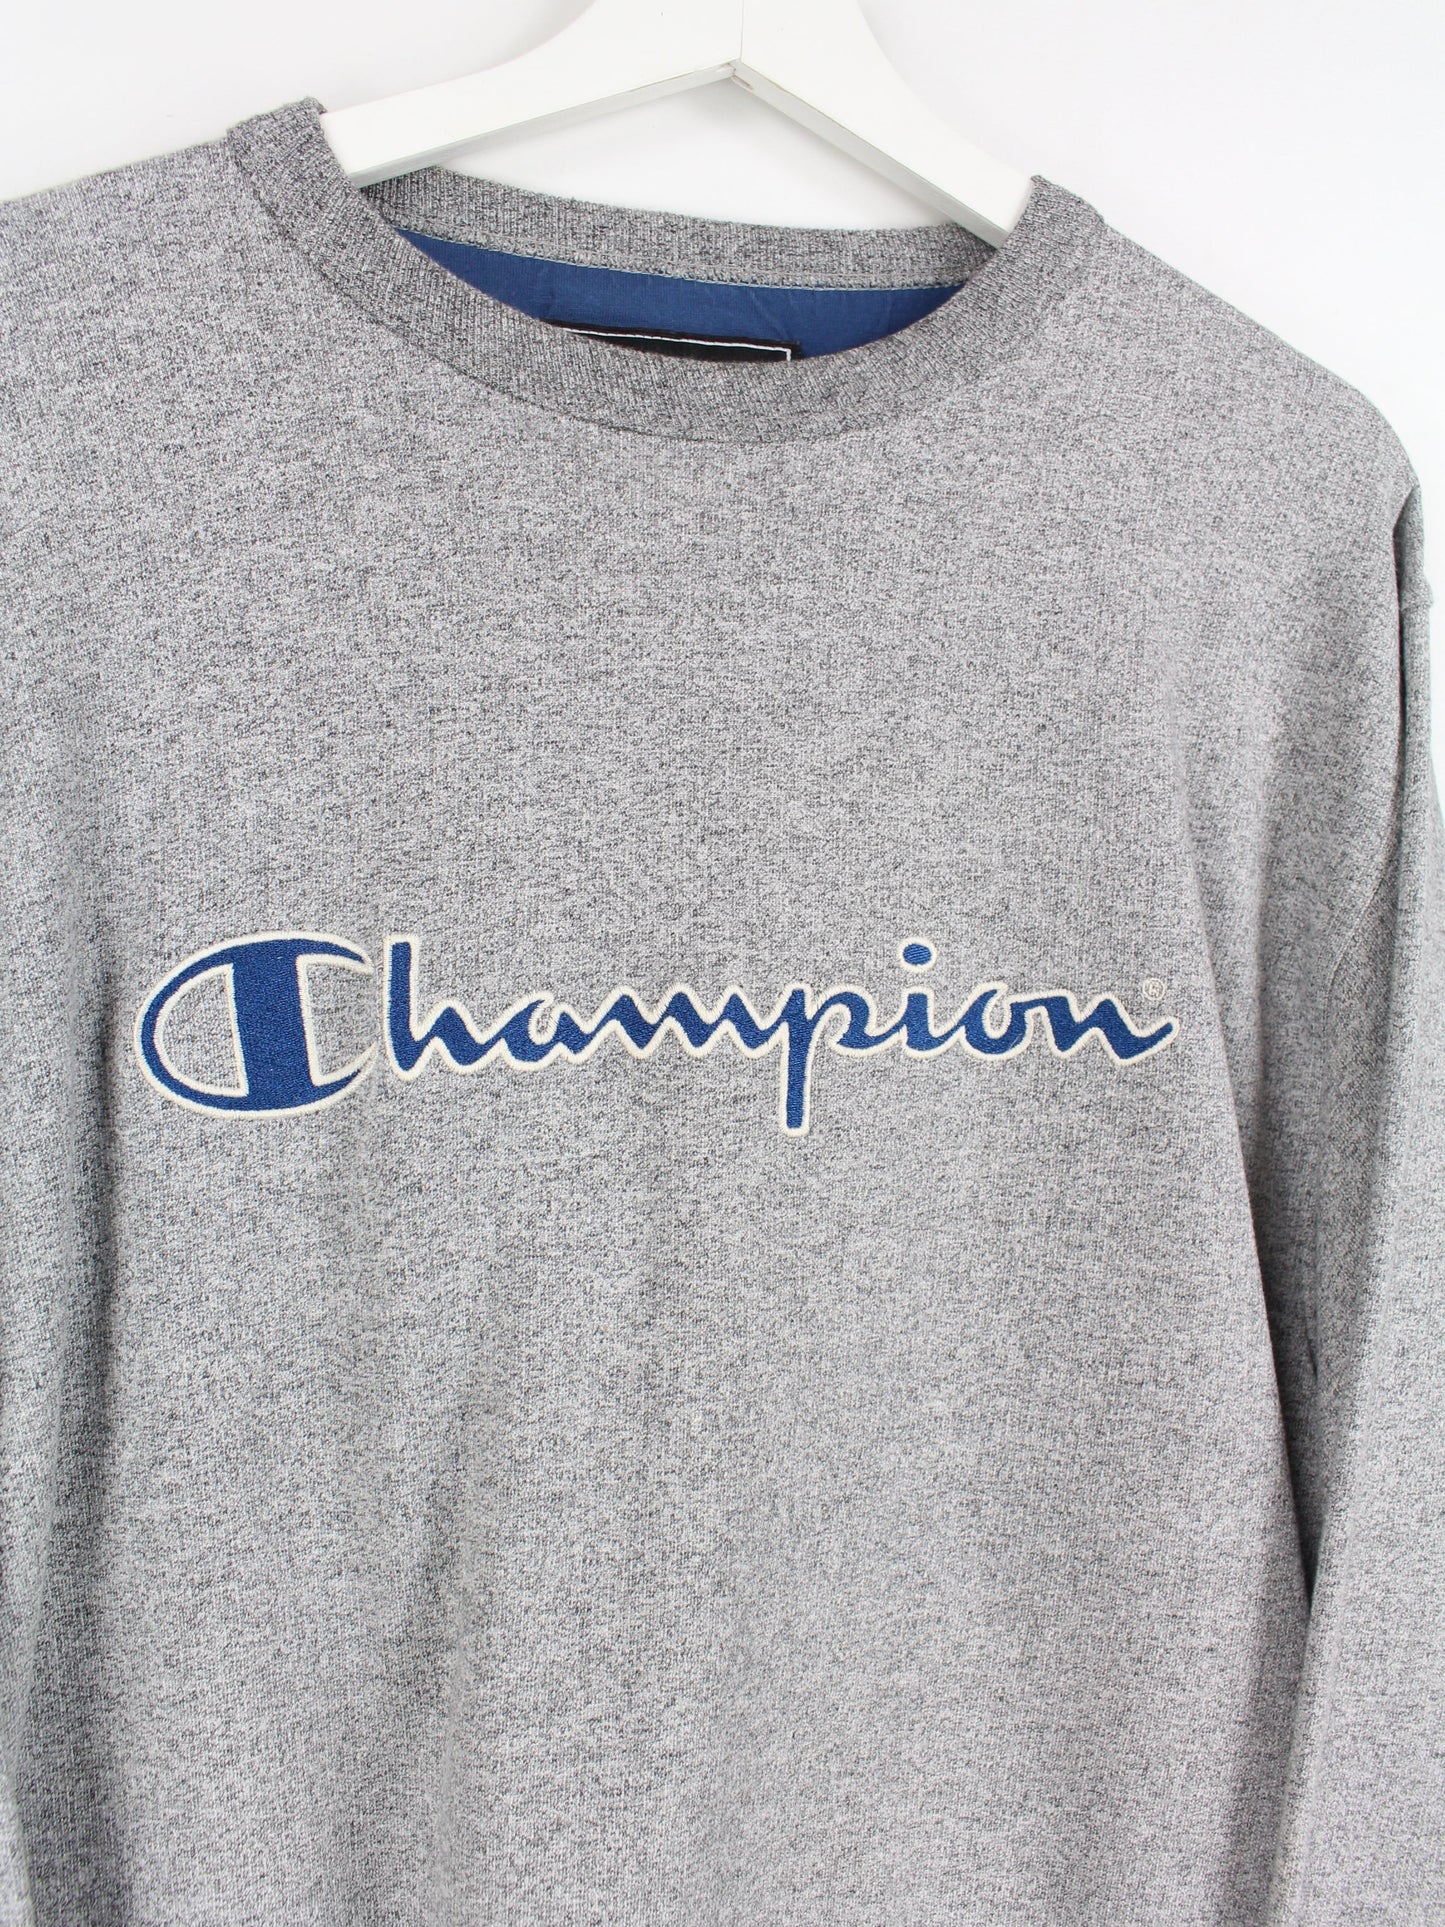 Champion Spellout Sweater Grau L